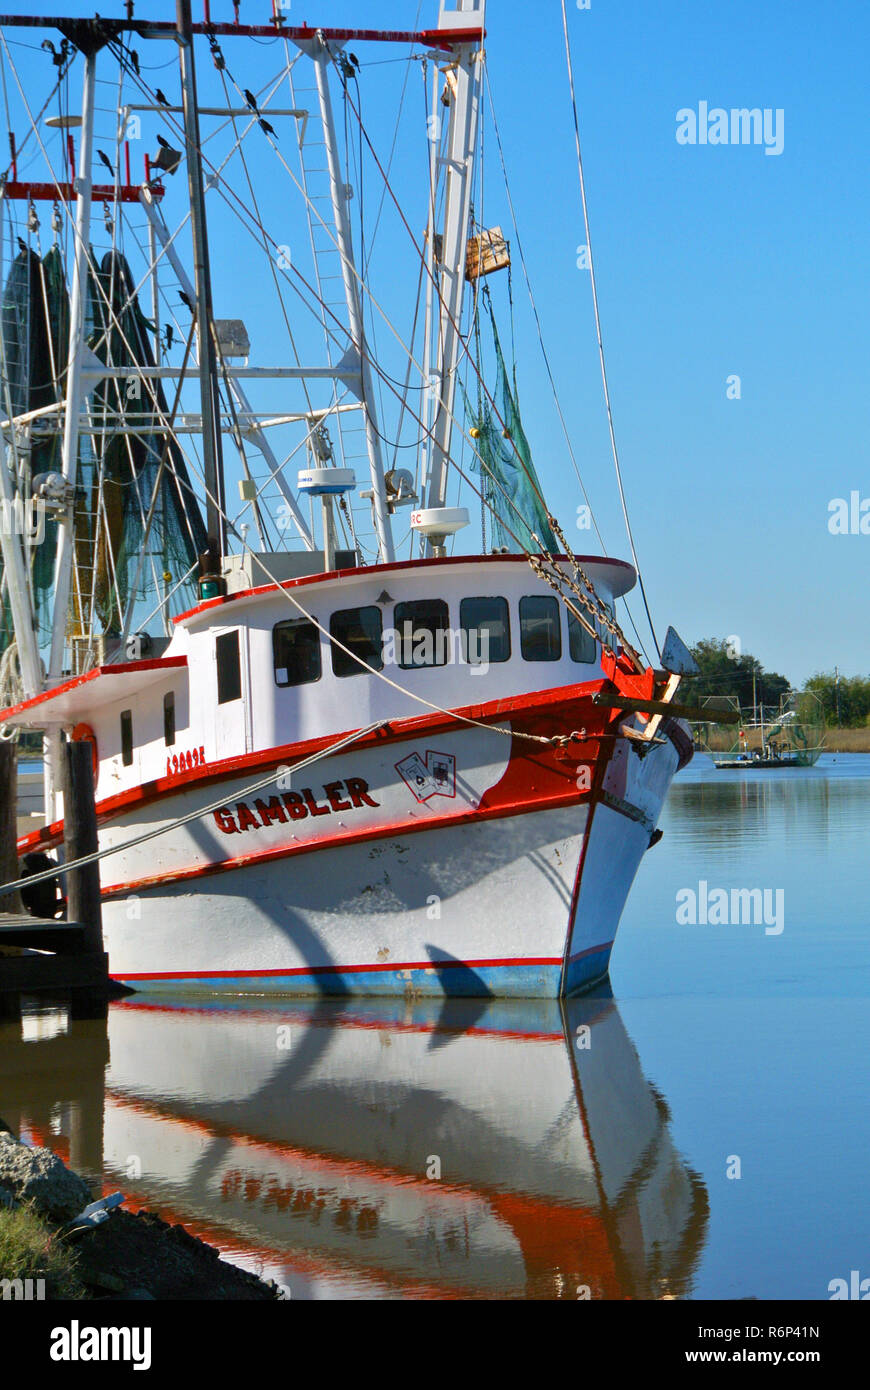 shrimp boat on mississippi river in louisiana Stock Photo - Alamy